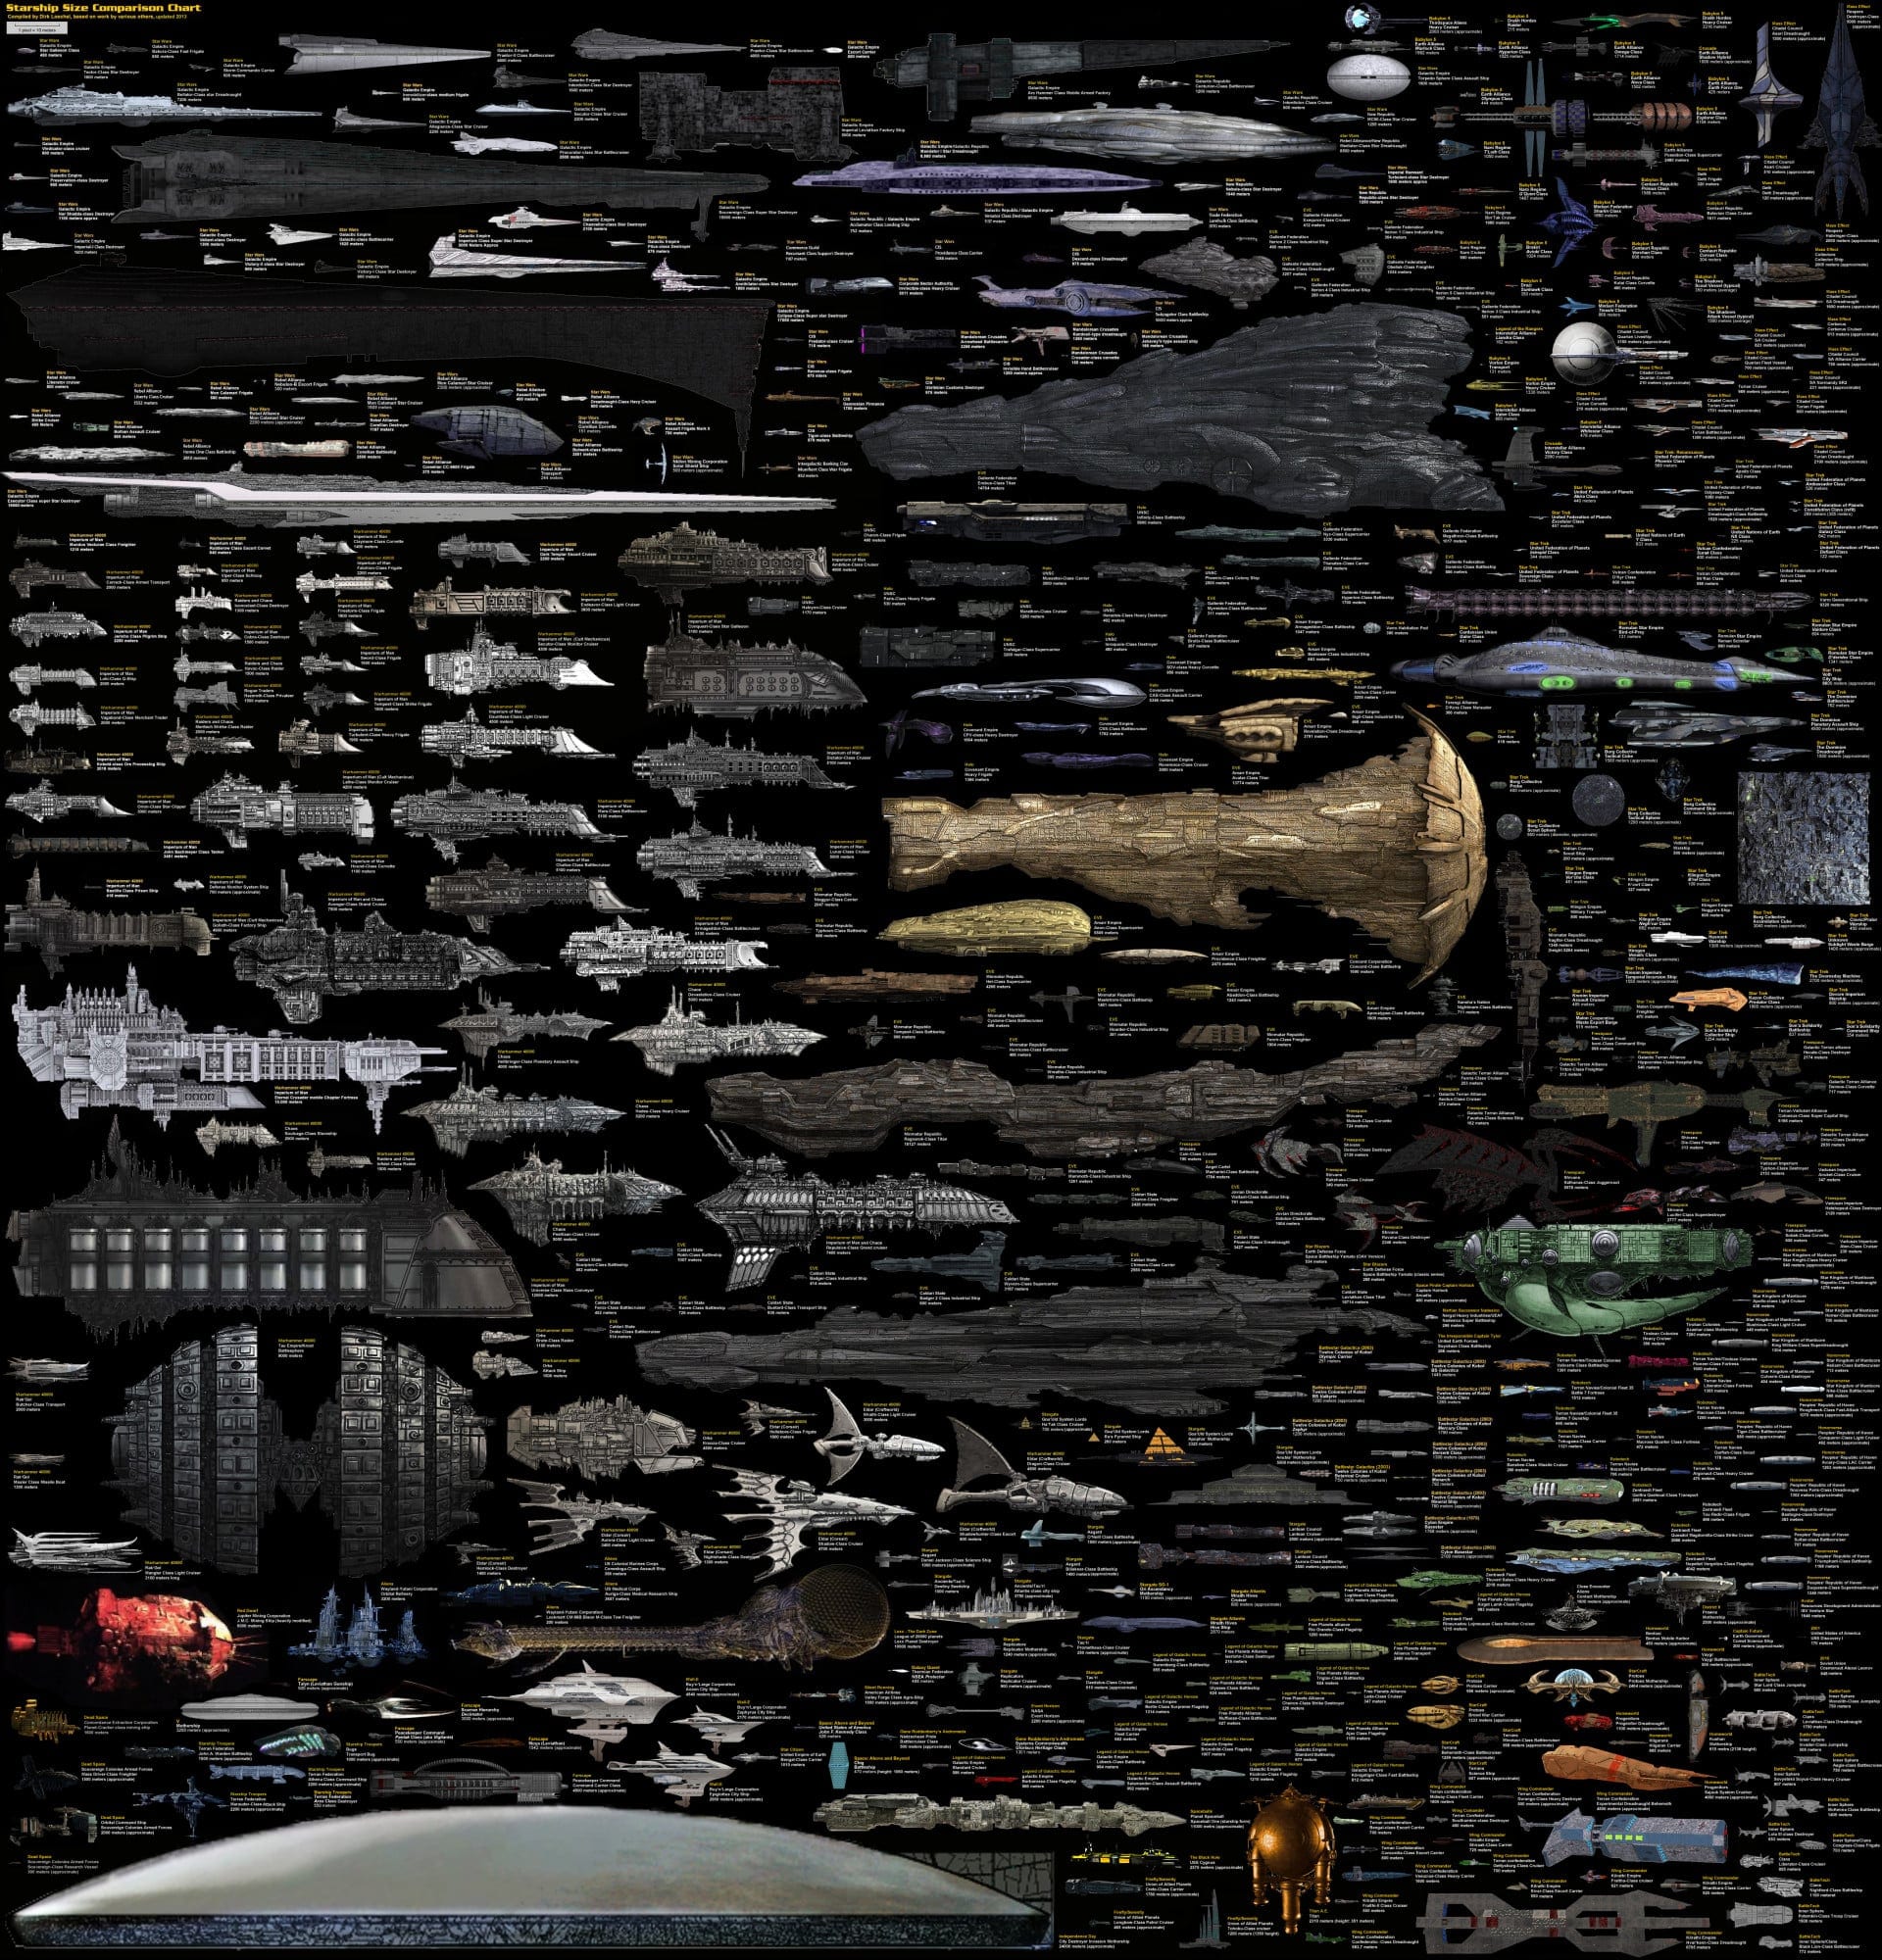 size_comparison___science_fiction_spaceships_by_dirkloechel-d6lfgdf